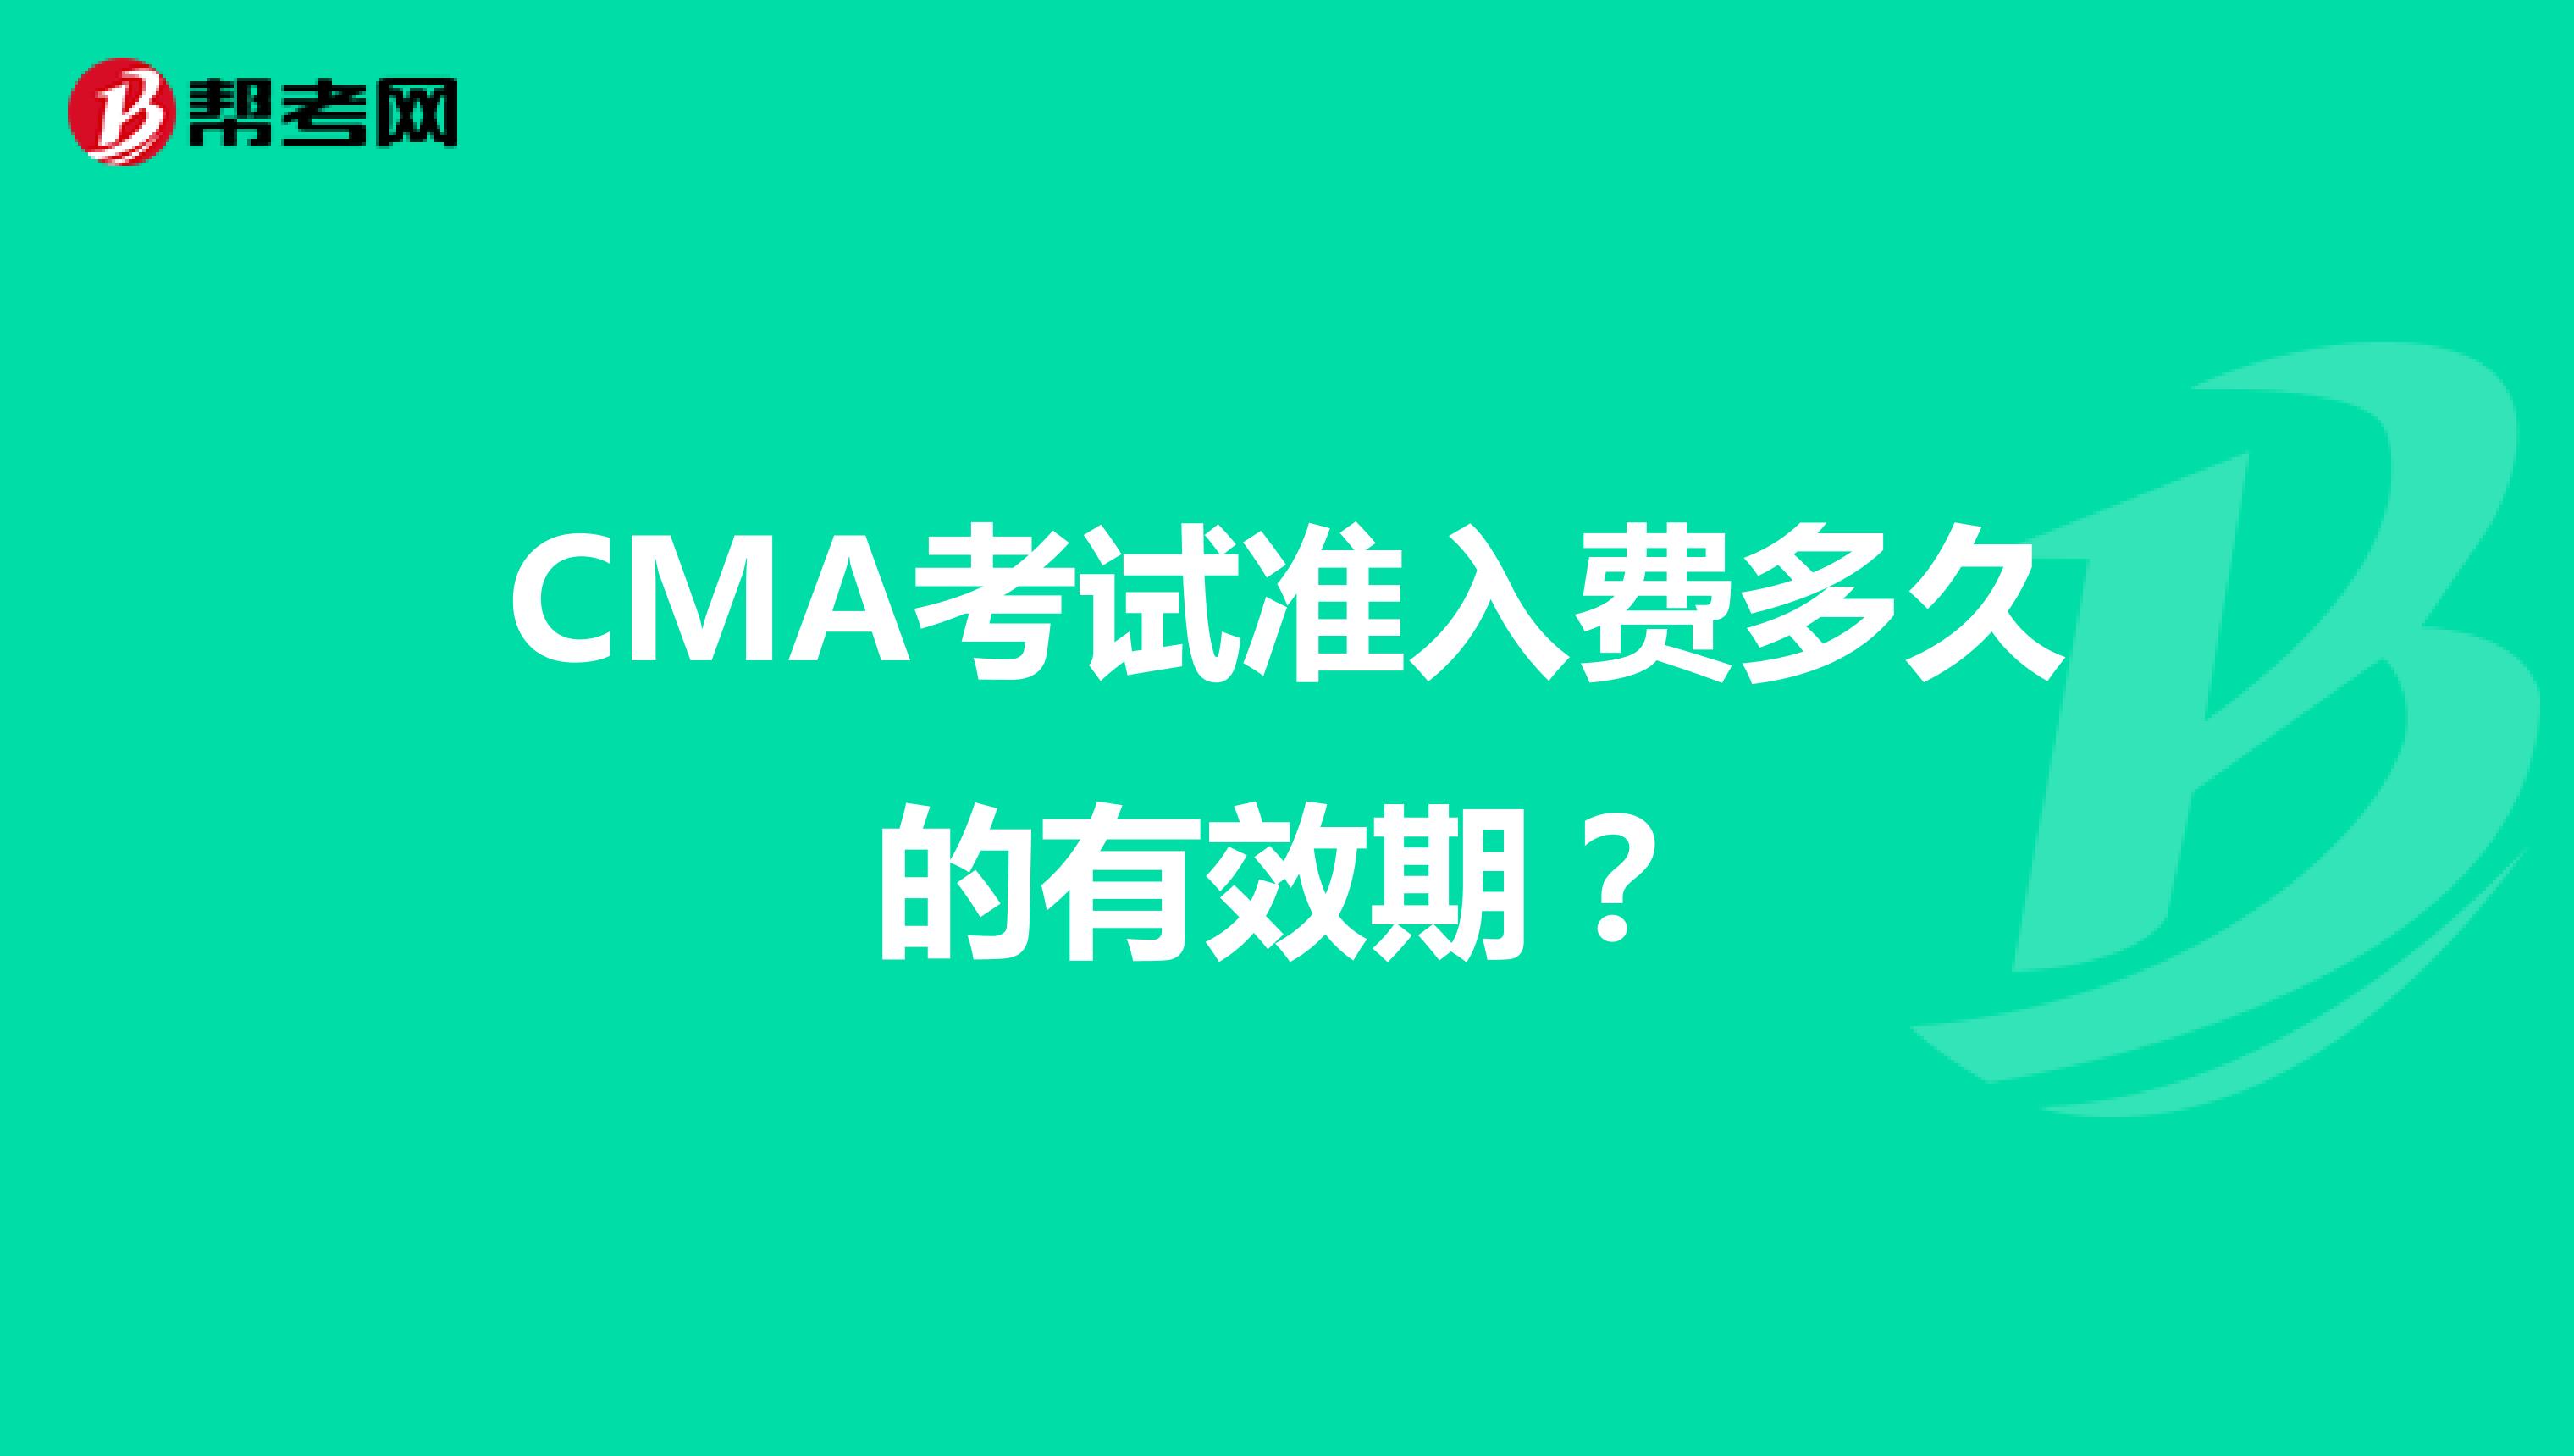 CMA考试准入费多久的有效期？